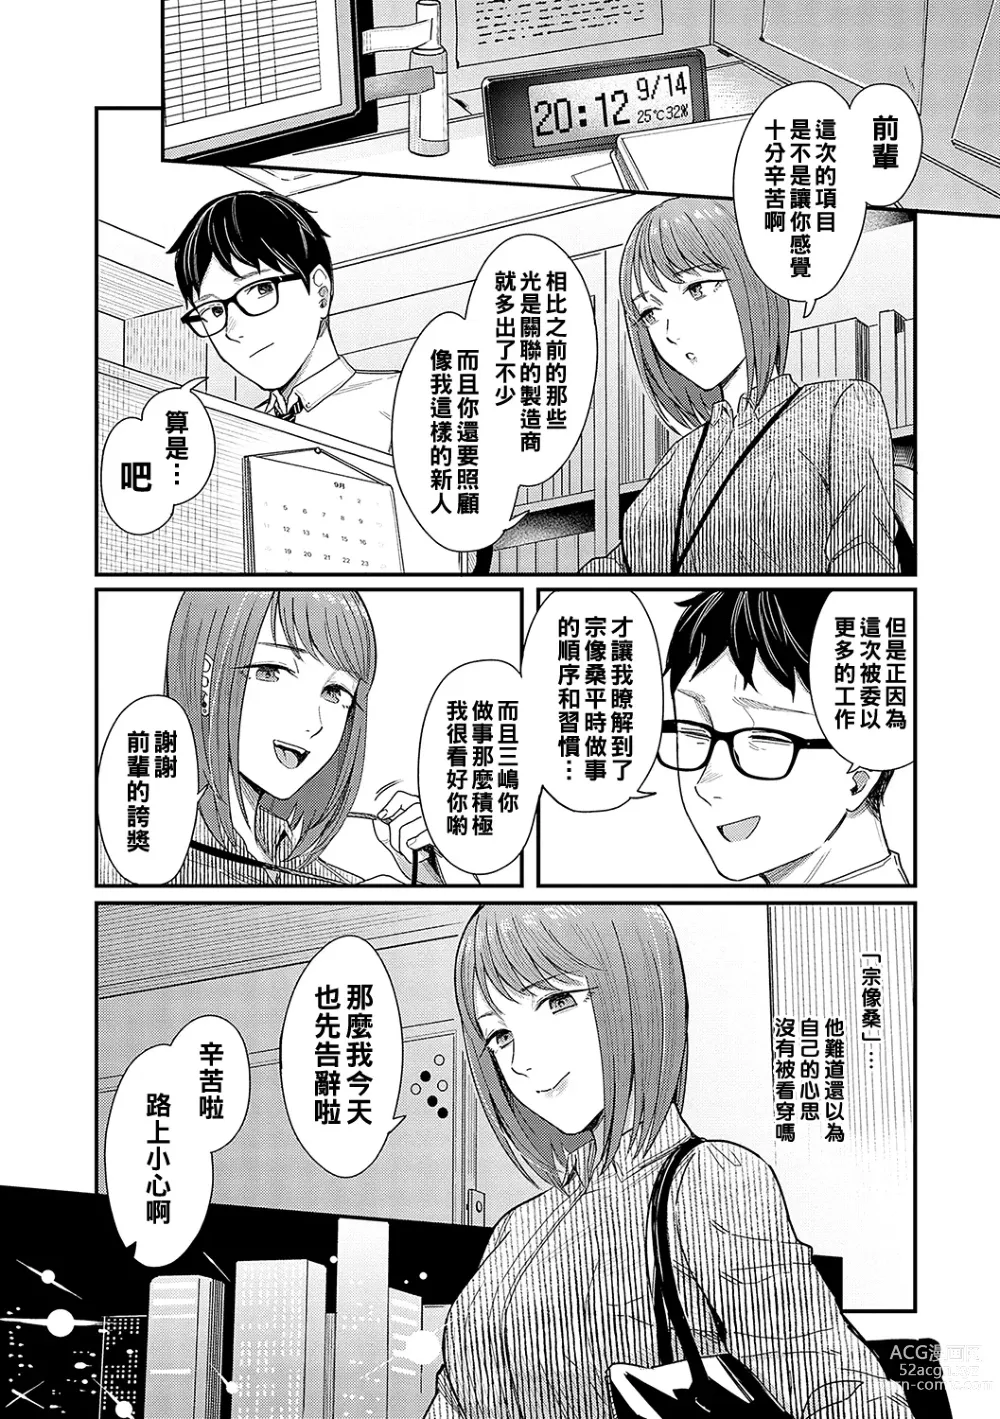 Page 3 of manga Magasashi Kanojo ga Sasayaku